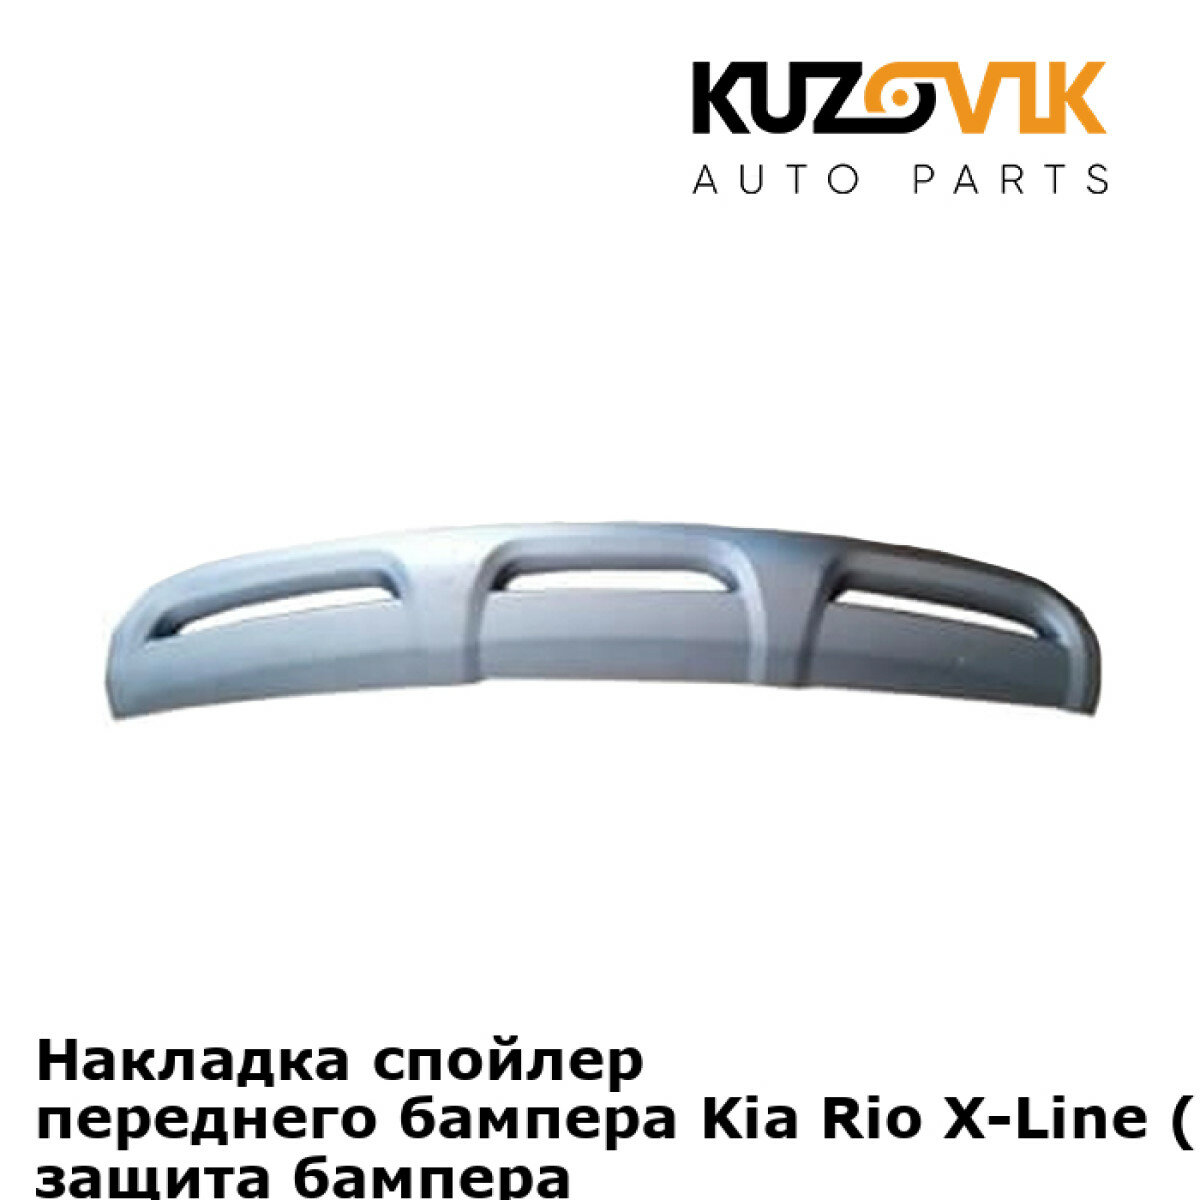 Накладка спойлер переднего бампера Kia Rio X-Line (2017-) серебристый, защита бампера